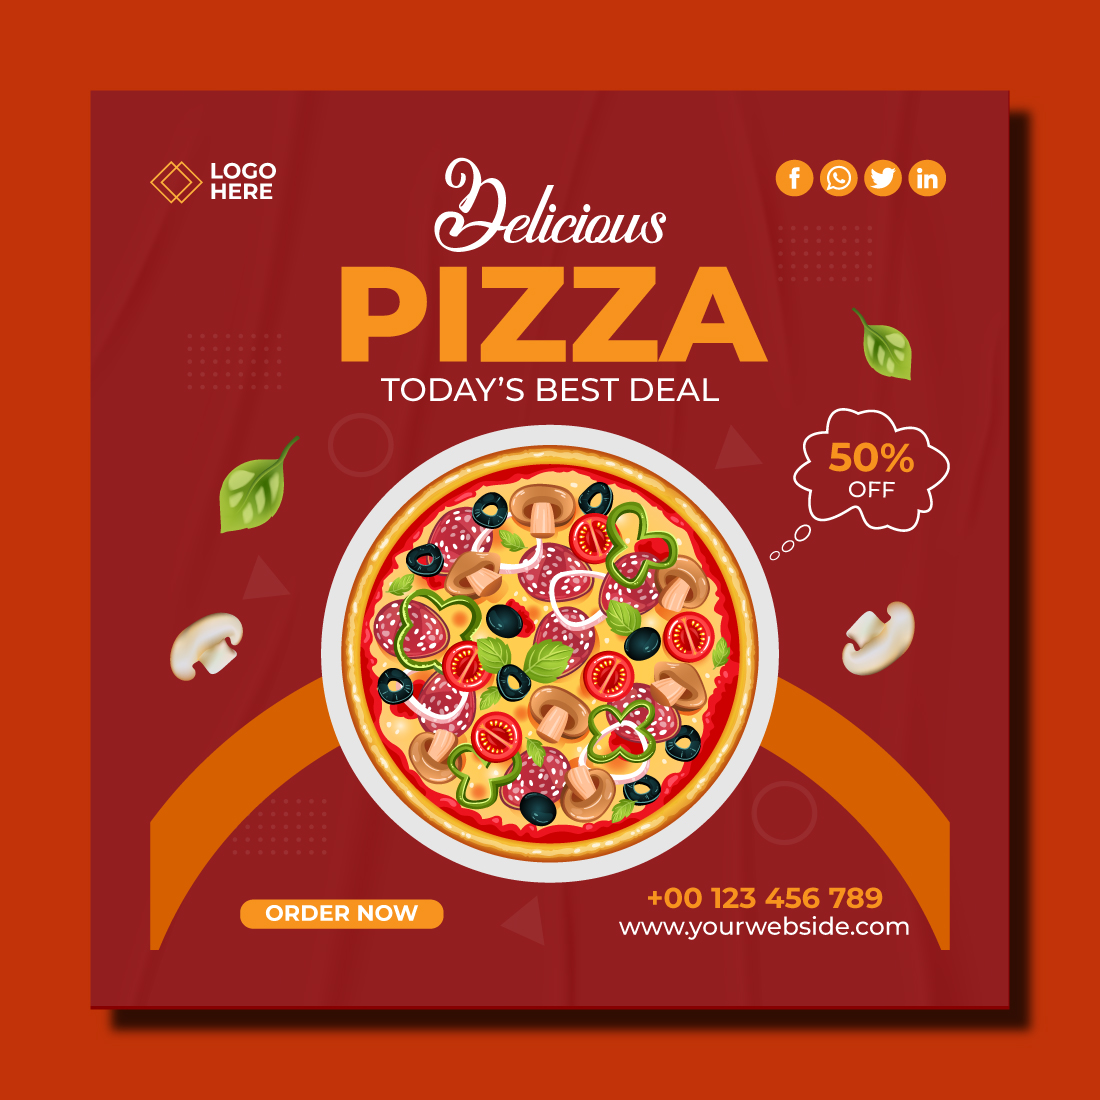 Pizza social media post cover image.